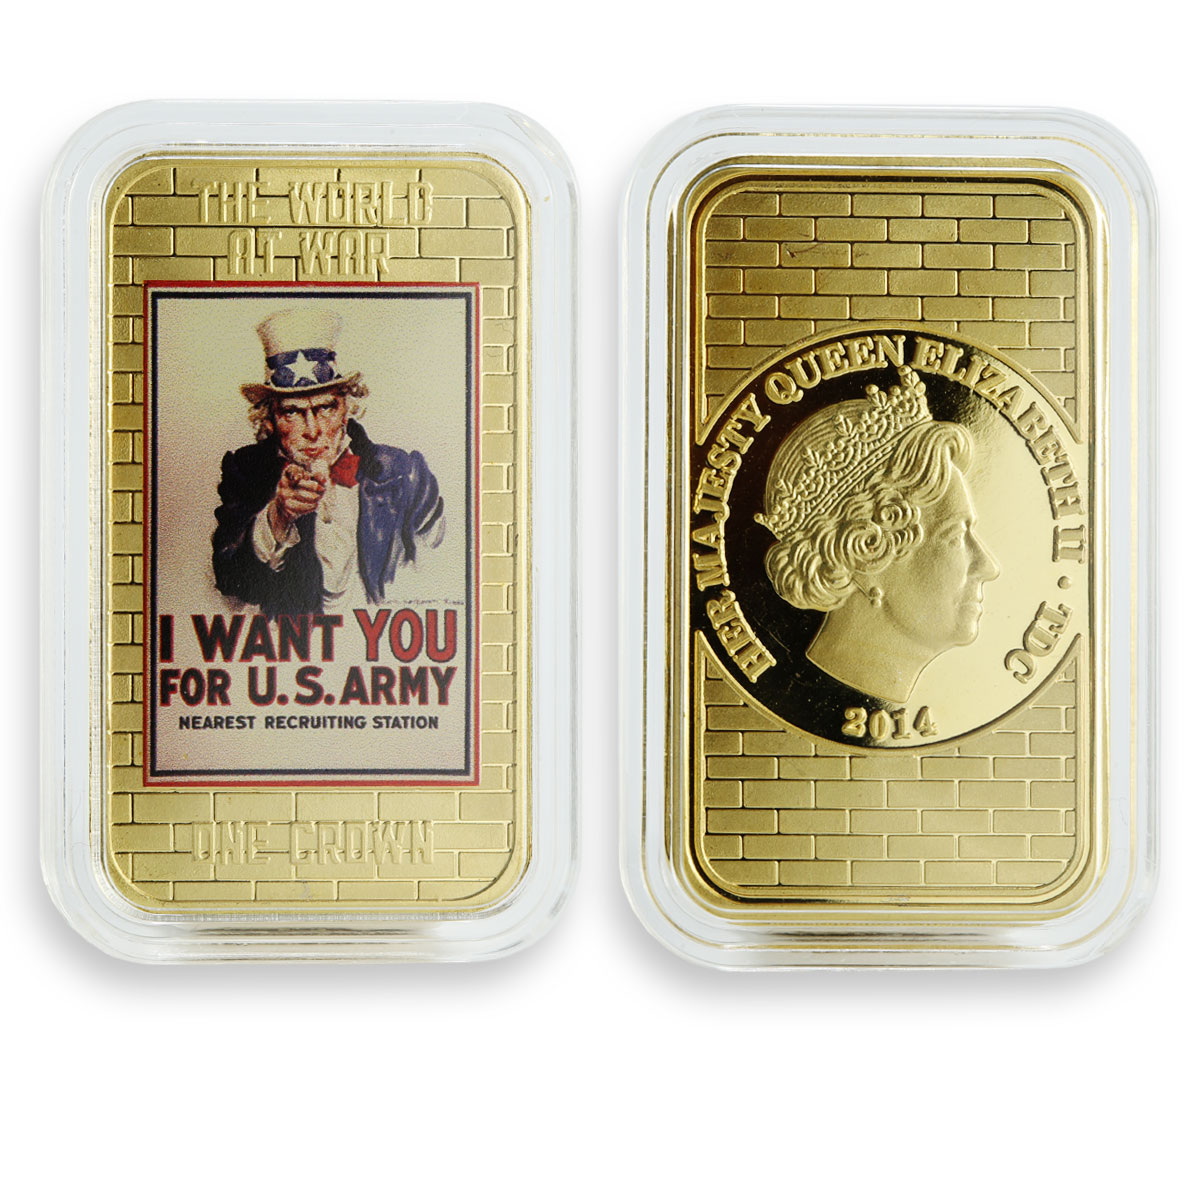 Tristan Da Cunha 1 Crown Gold-Plated 6 Coins Set The World At War, Bar 2014 Coin